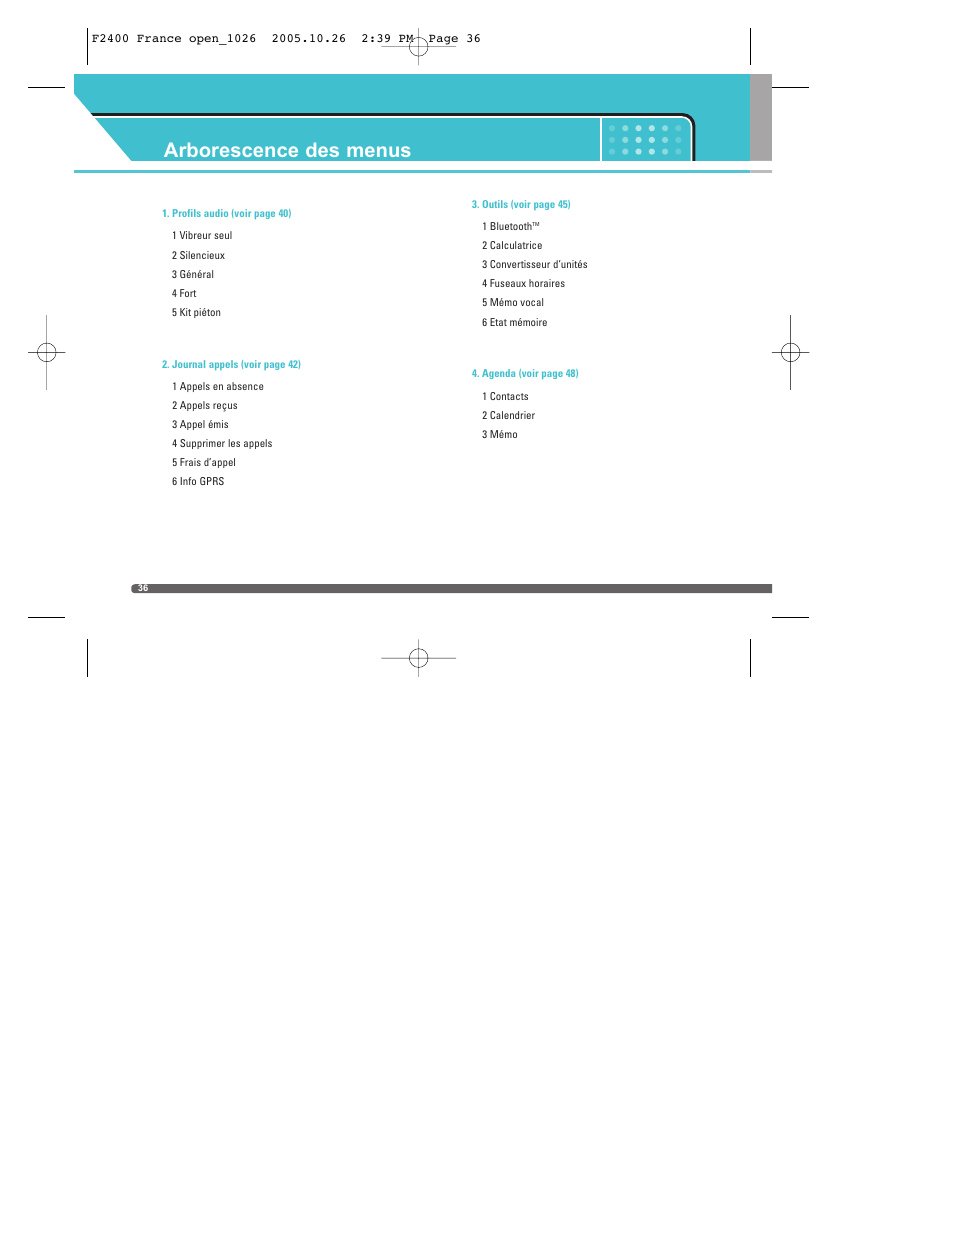 Arborescence des menus | LG F2400 Manuel d'utilisation | Page 35 / 89